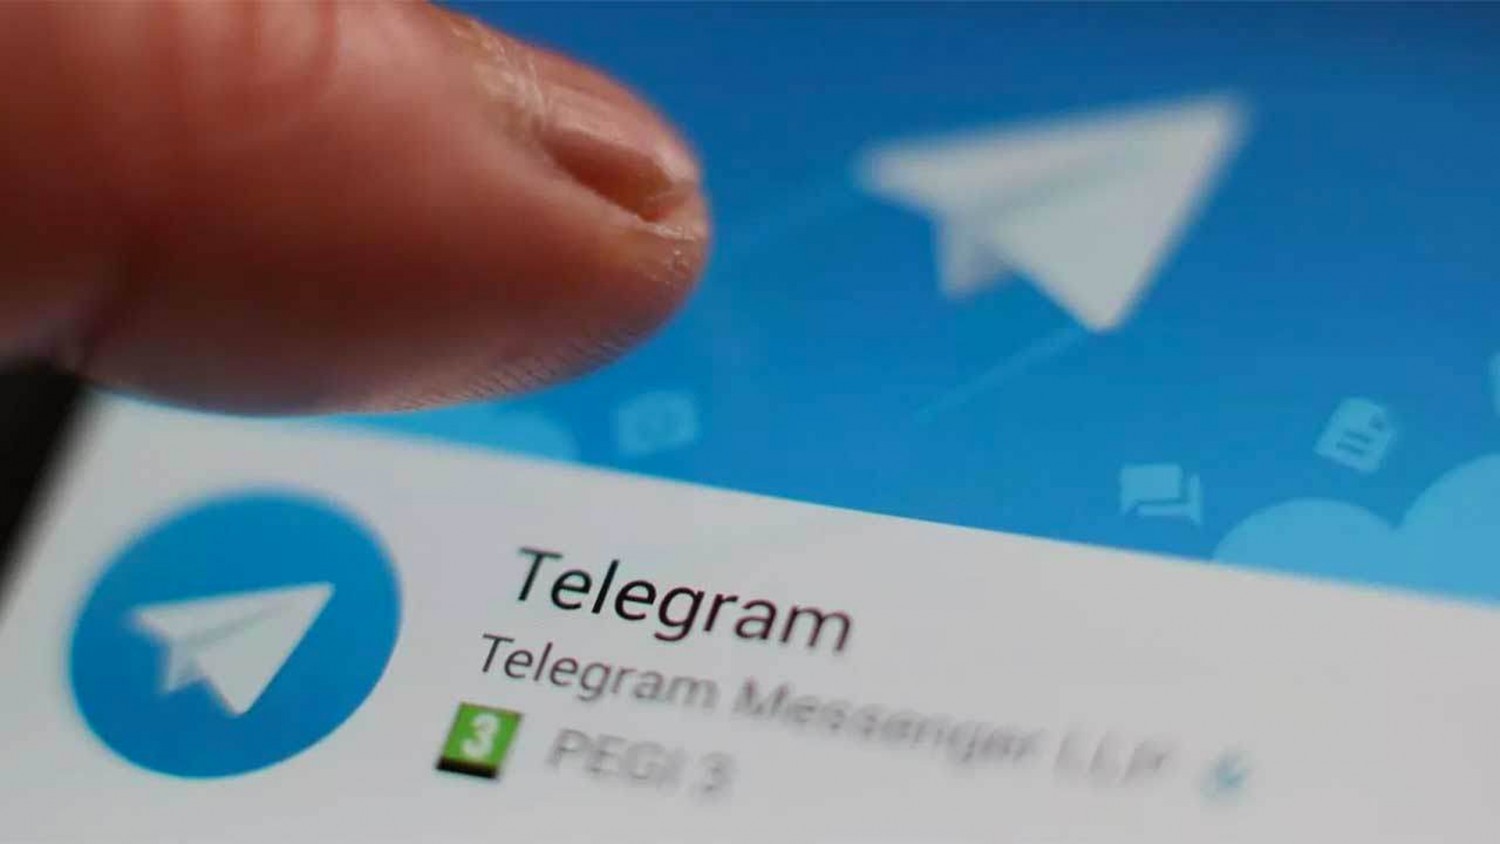 open the telegram